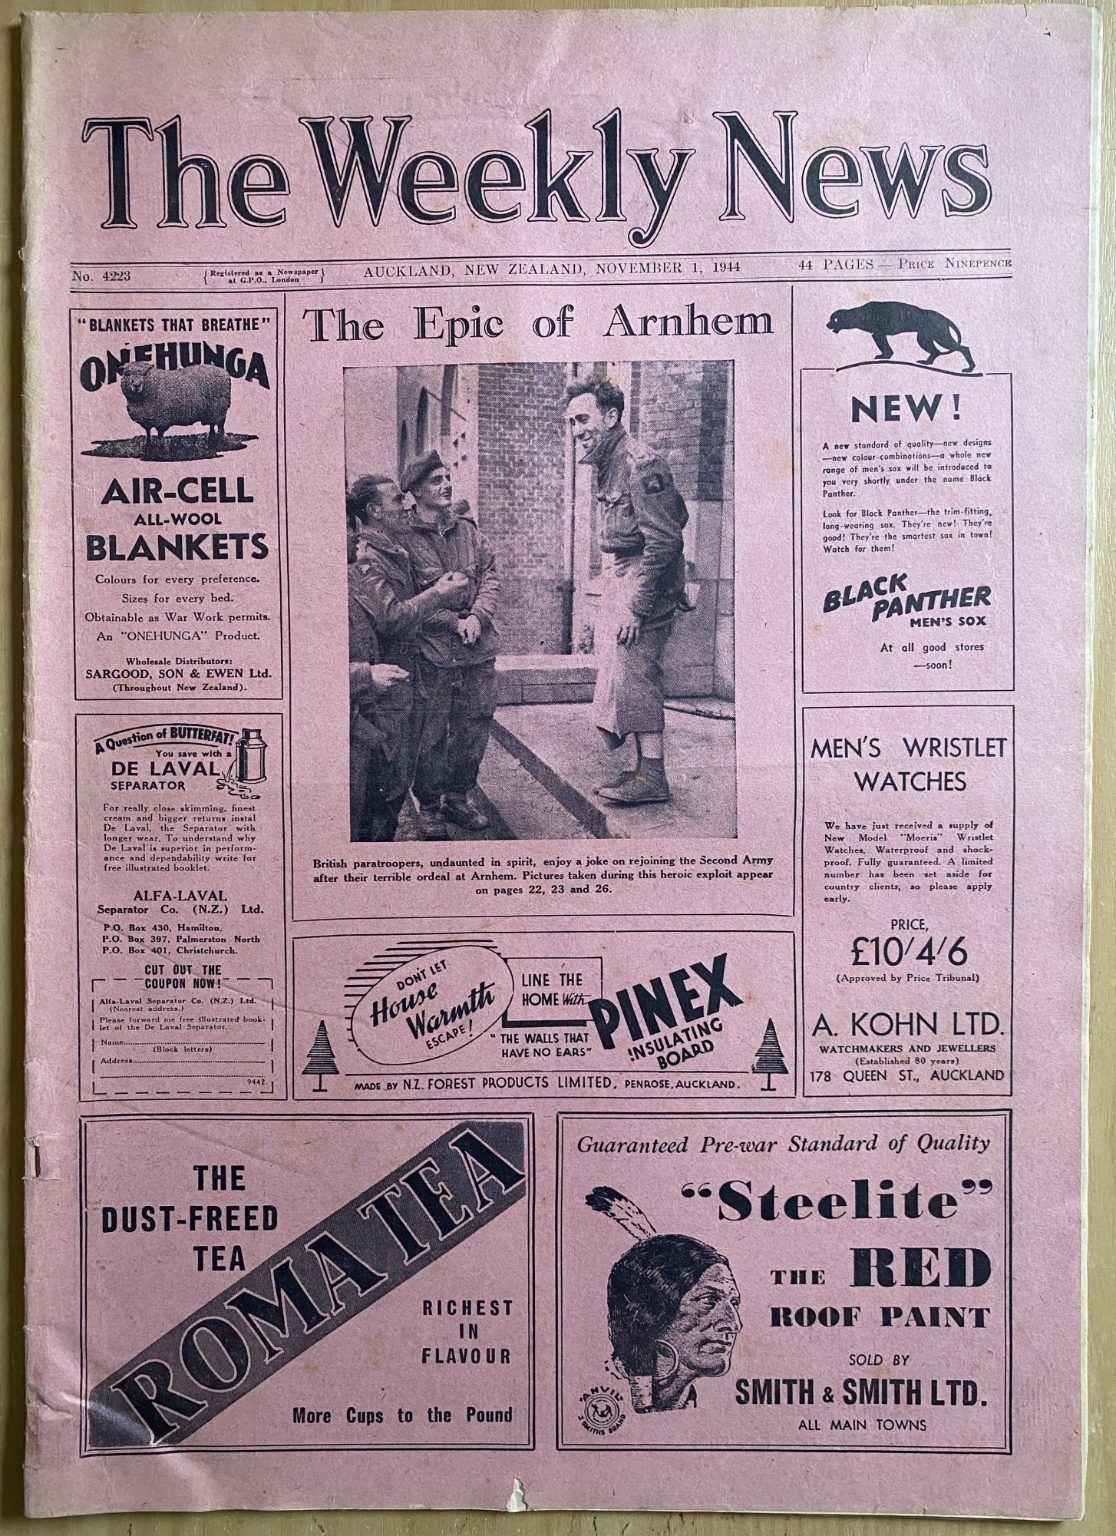 OLD NEWSPAPER: The Weekly News - No. 4223, 1 November 1944